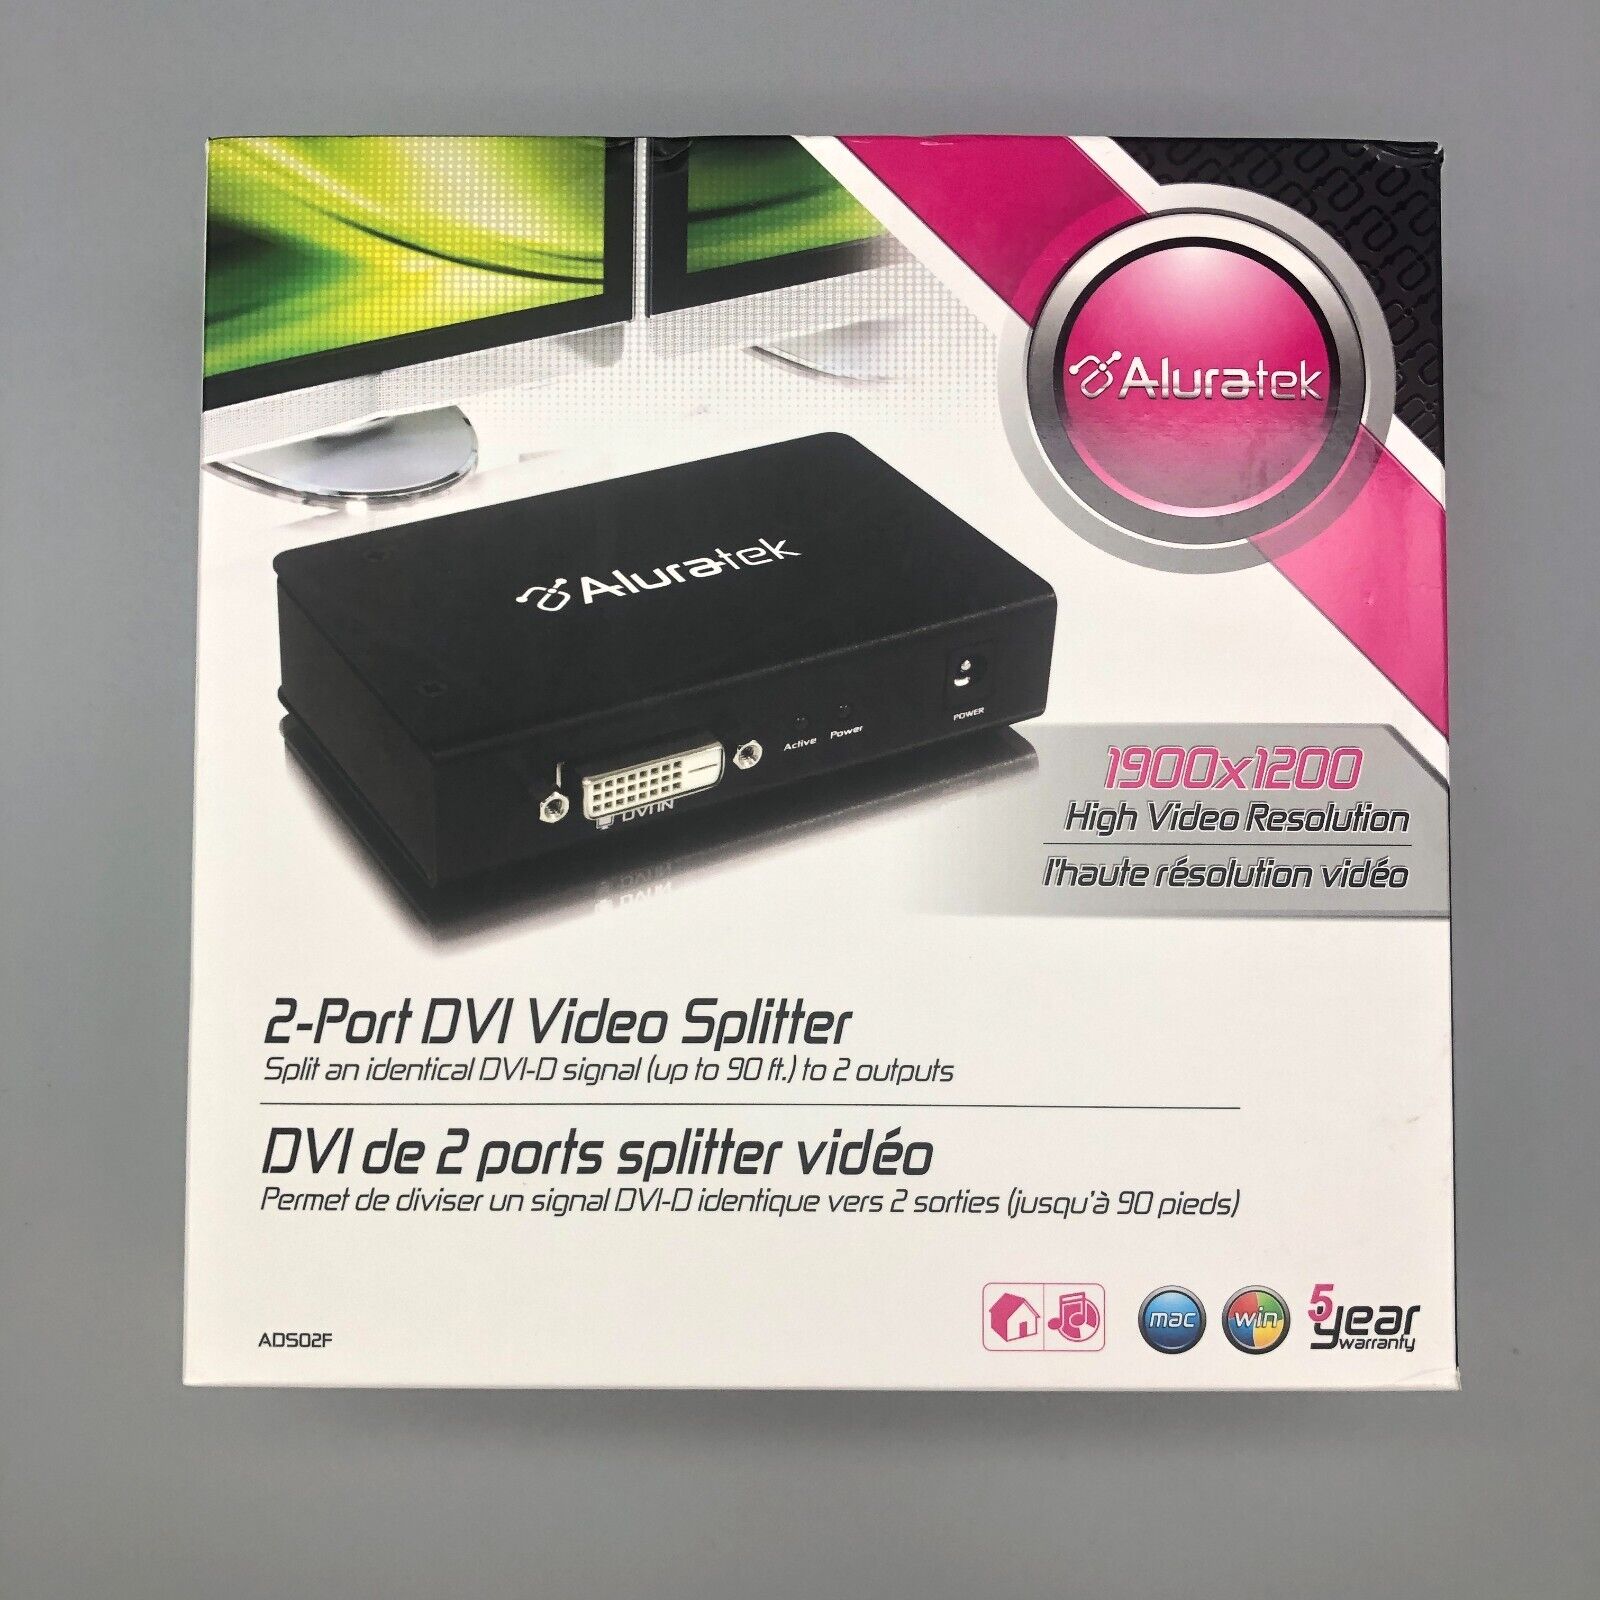 Aluratek ADS02F 1900x1200 2-Port DVI Video Splitter New in Box